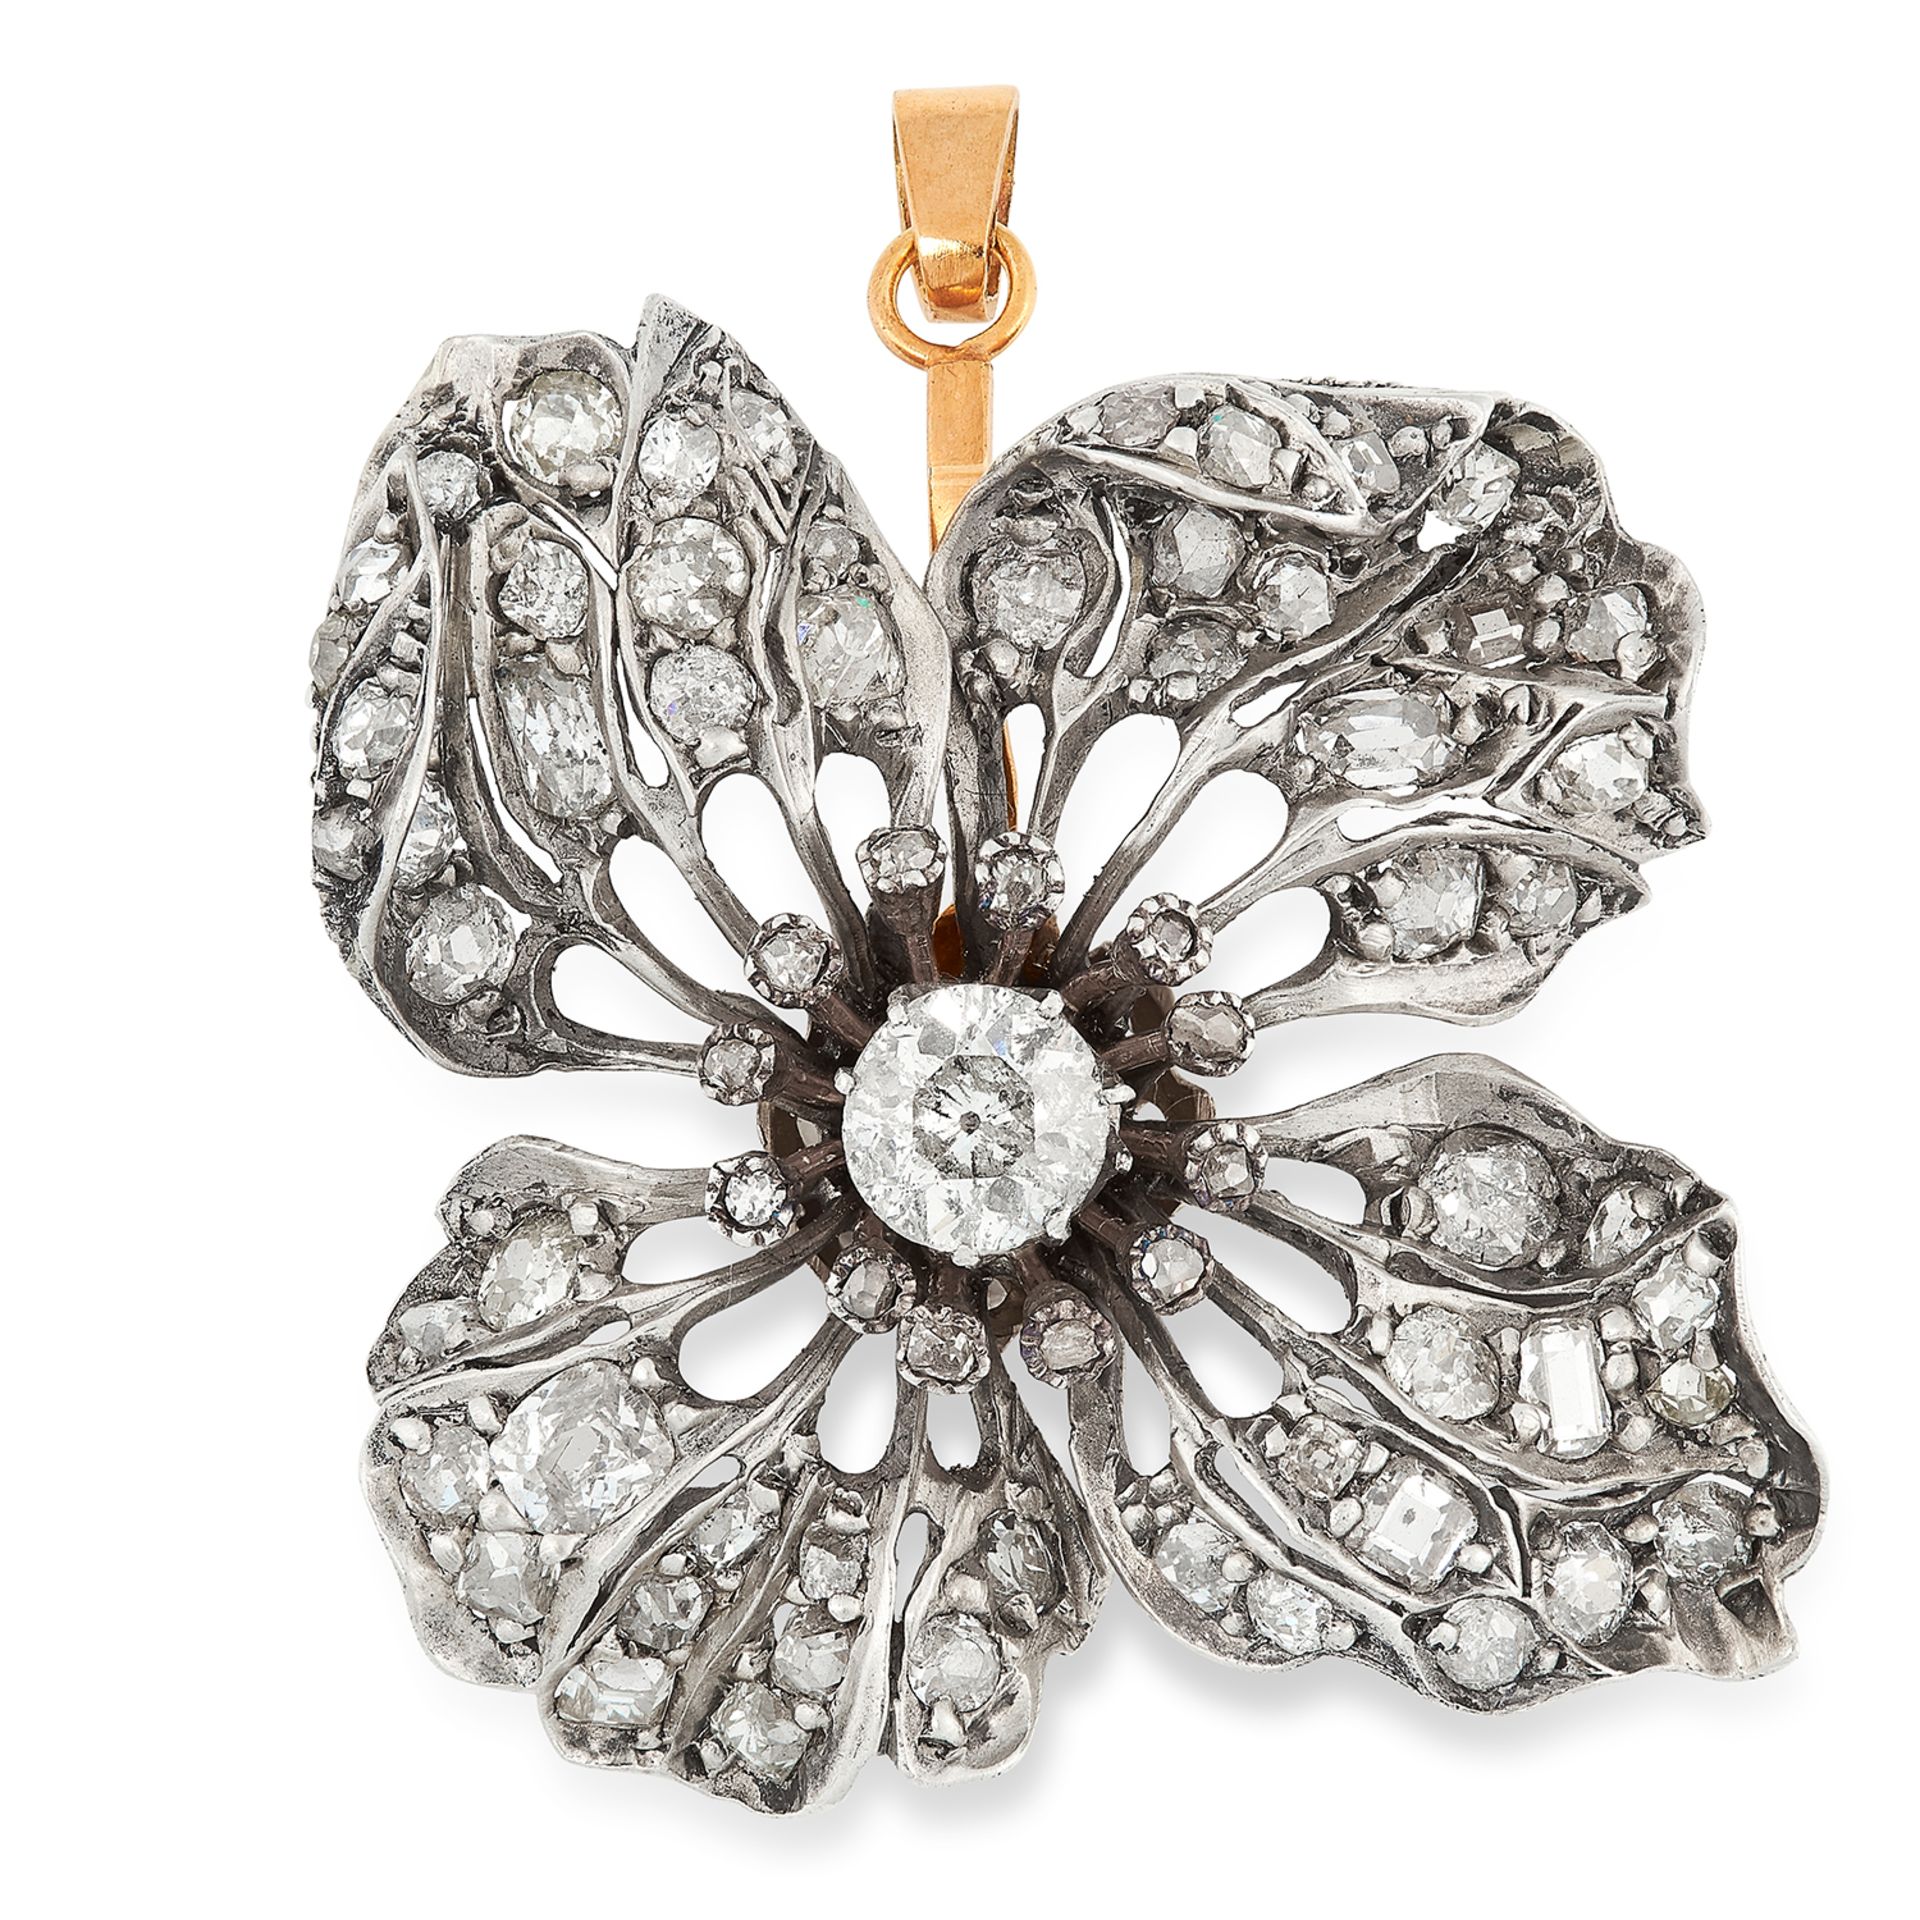 AN ANTIQUE DIAMOND FLOWER RING / BROOCH / PENDANT the flower head design set with a principal old - Bild 3 aus 3